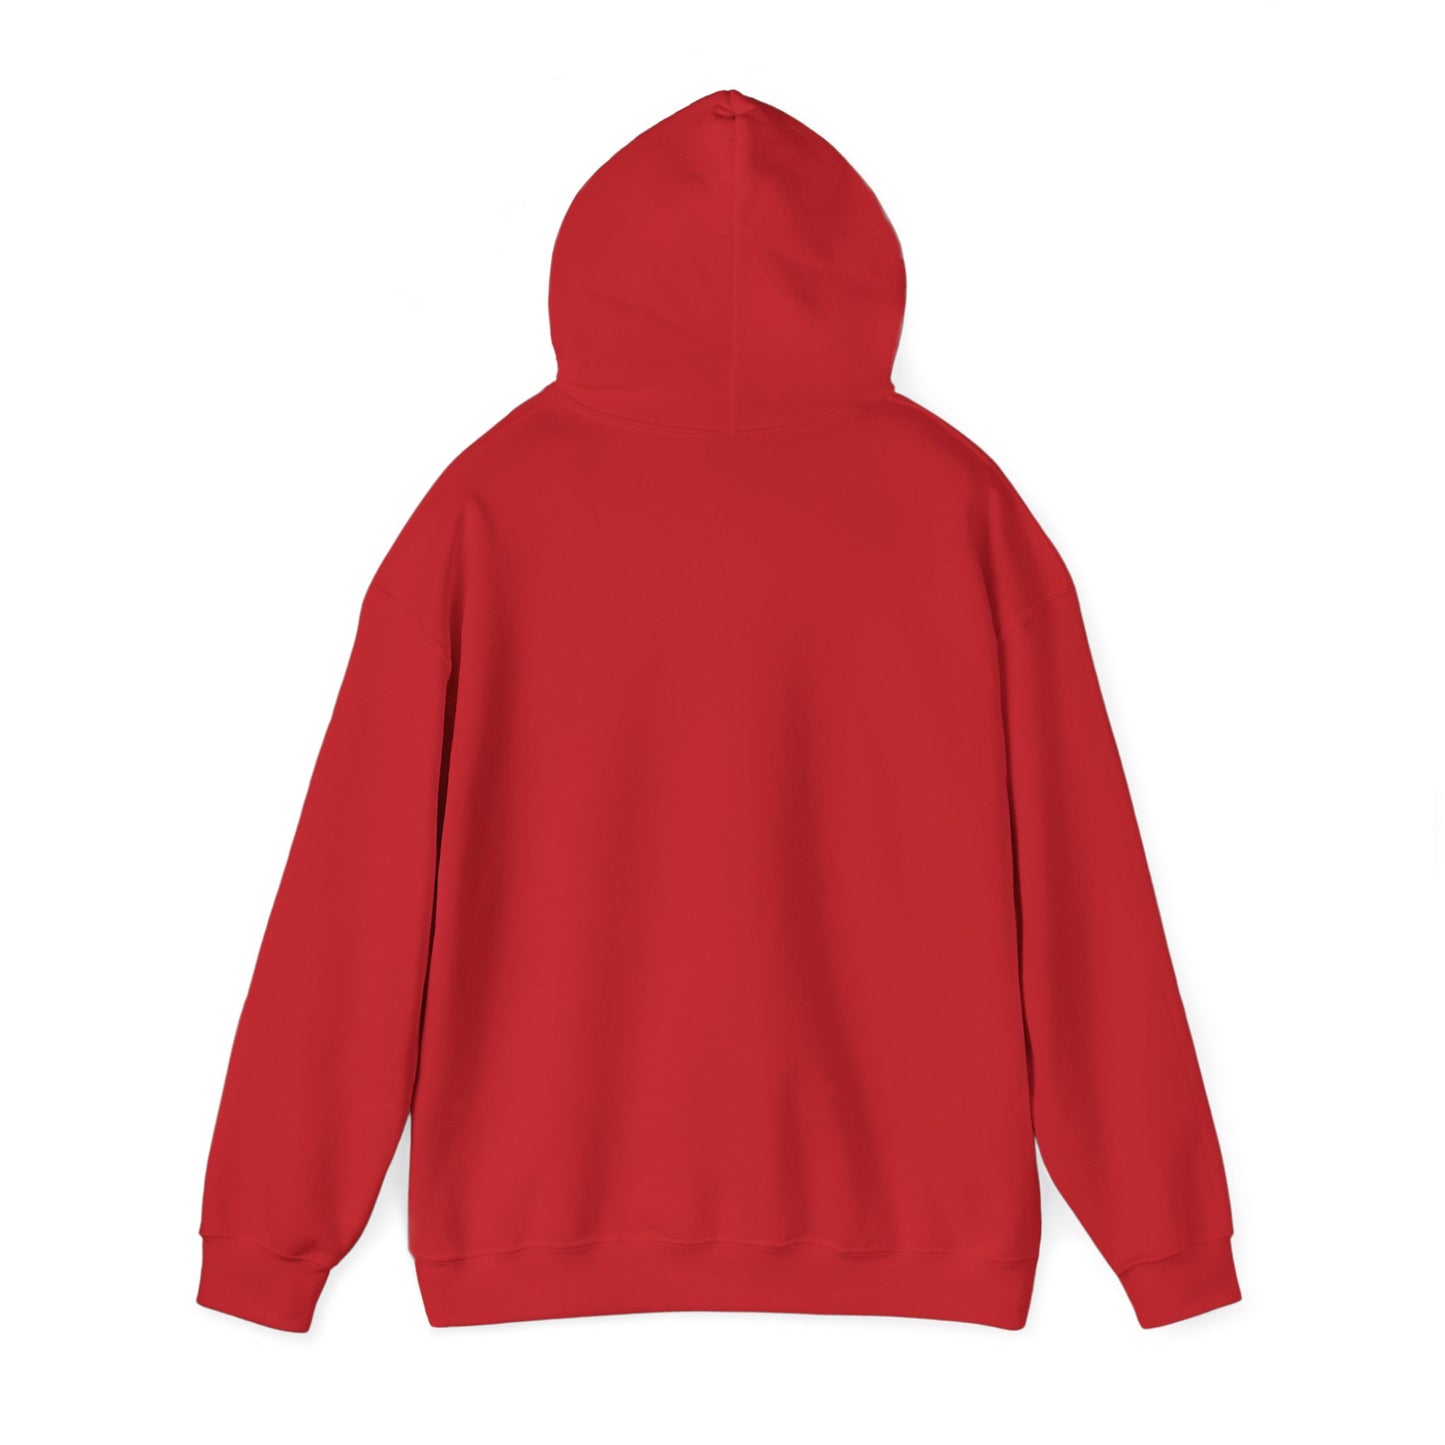 HBCU Unisex Heavy Blend™ Hooded Sweatshirt